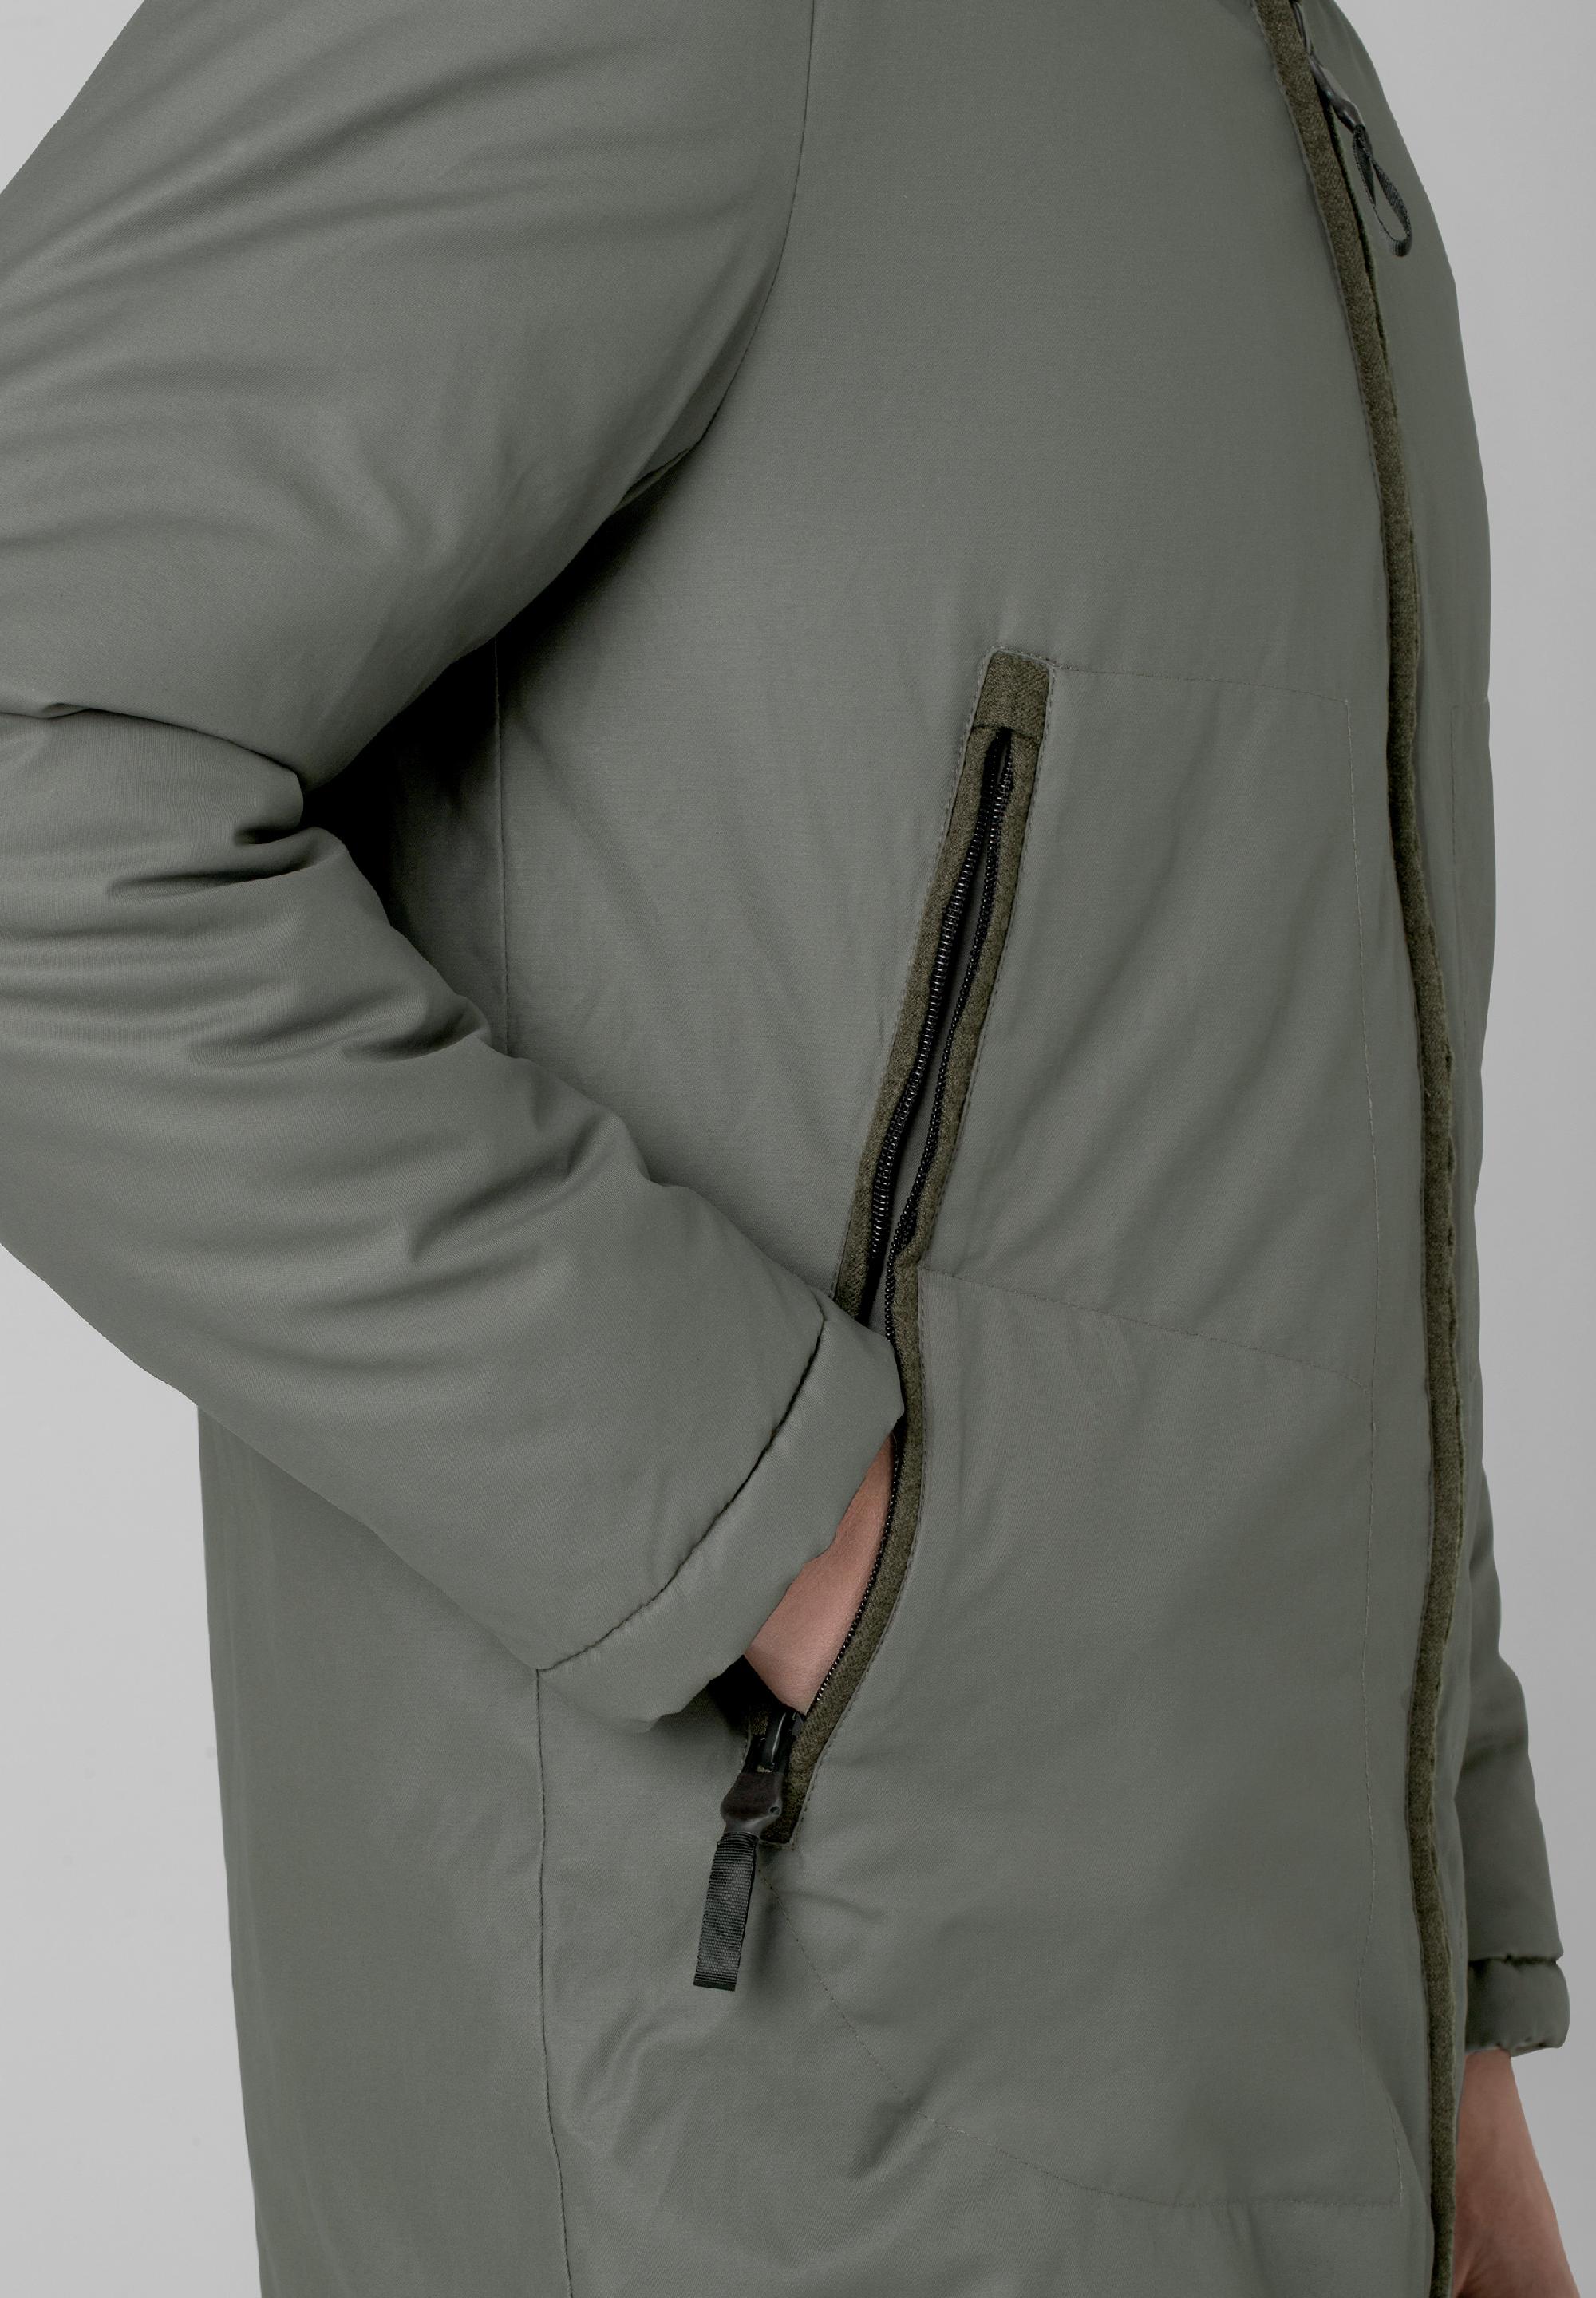 Attachable Hood Long Jacket 1